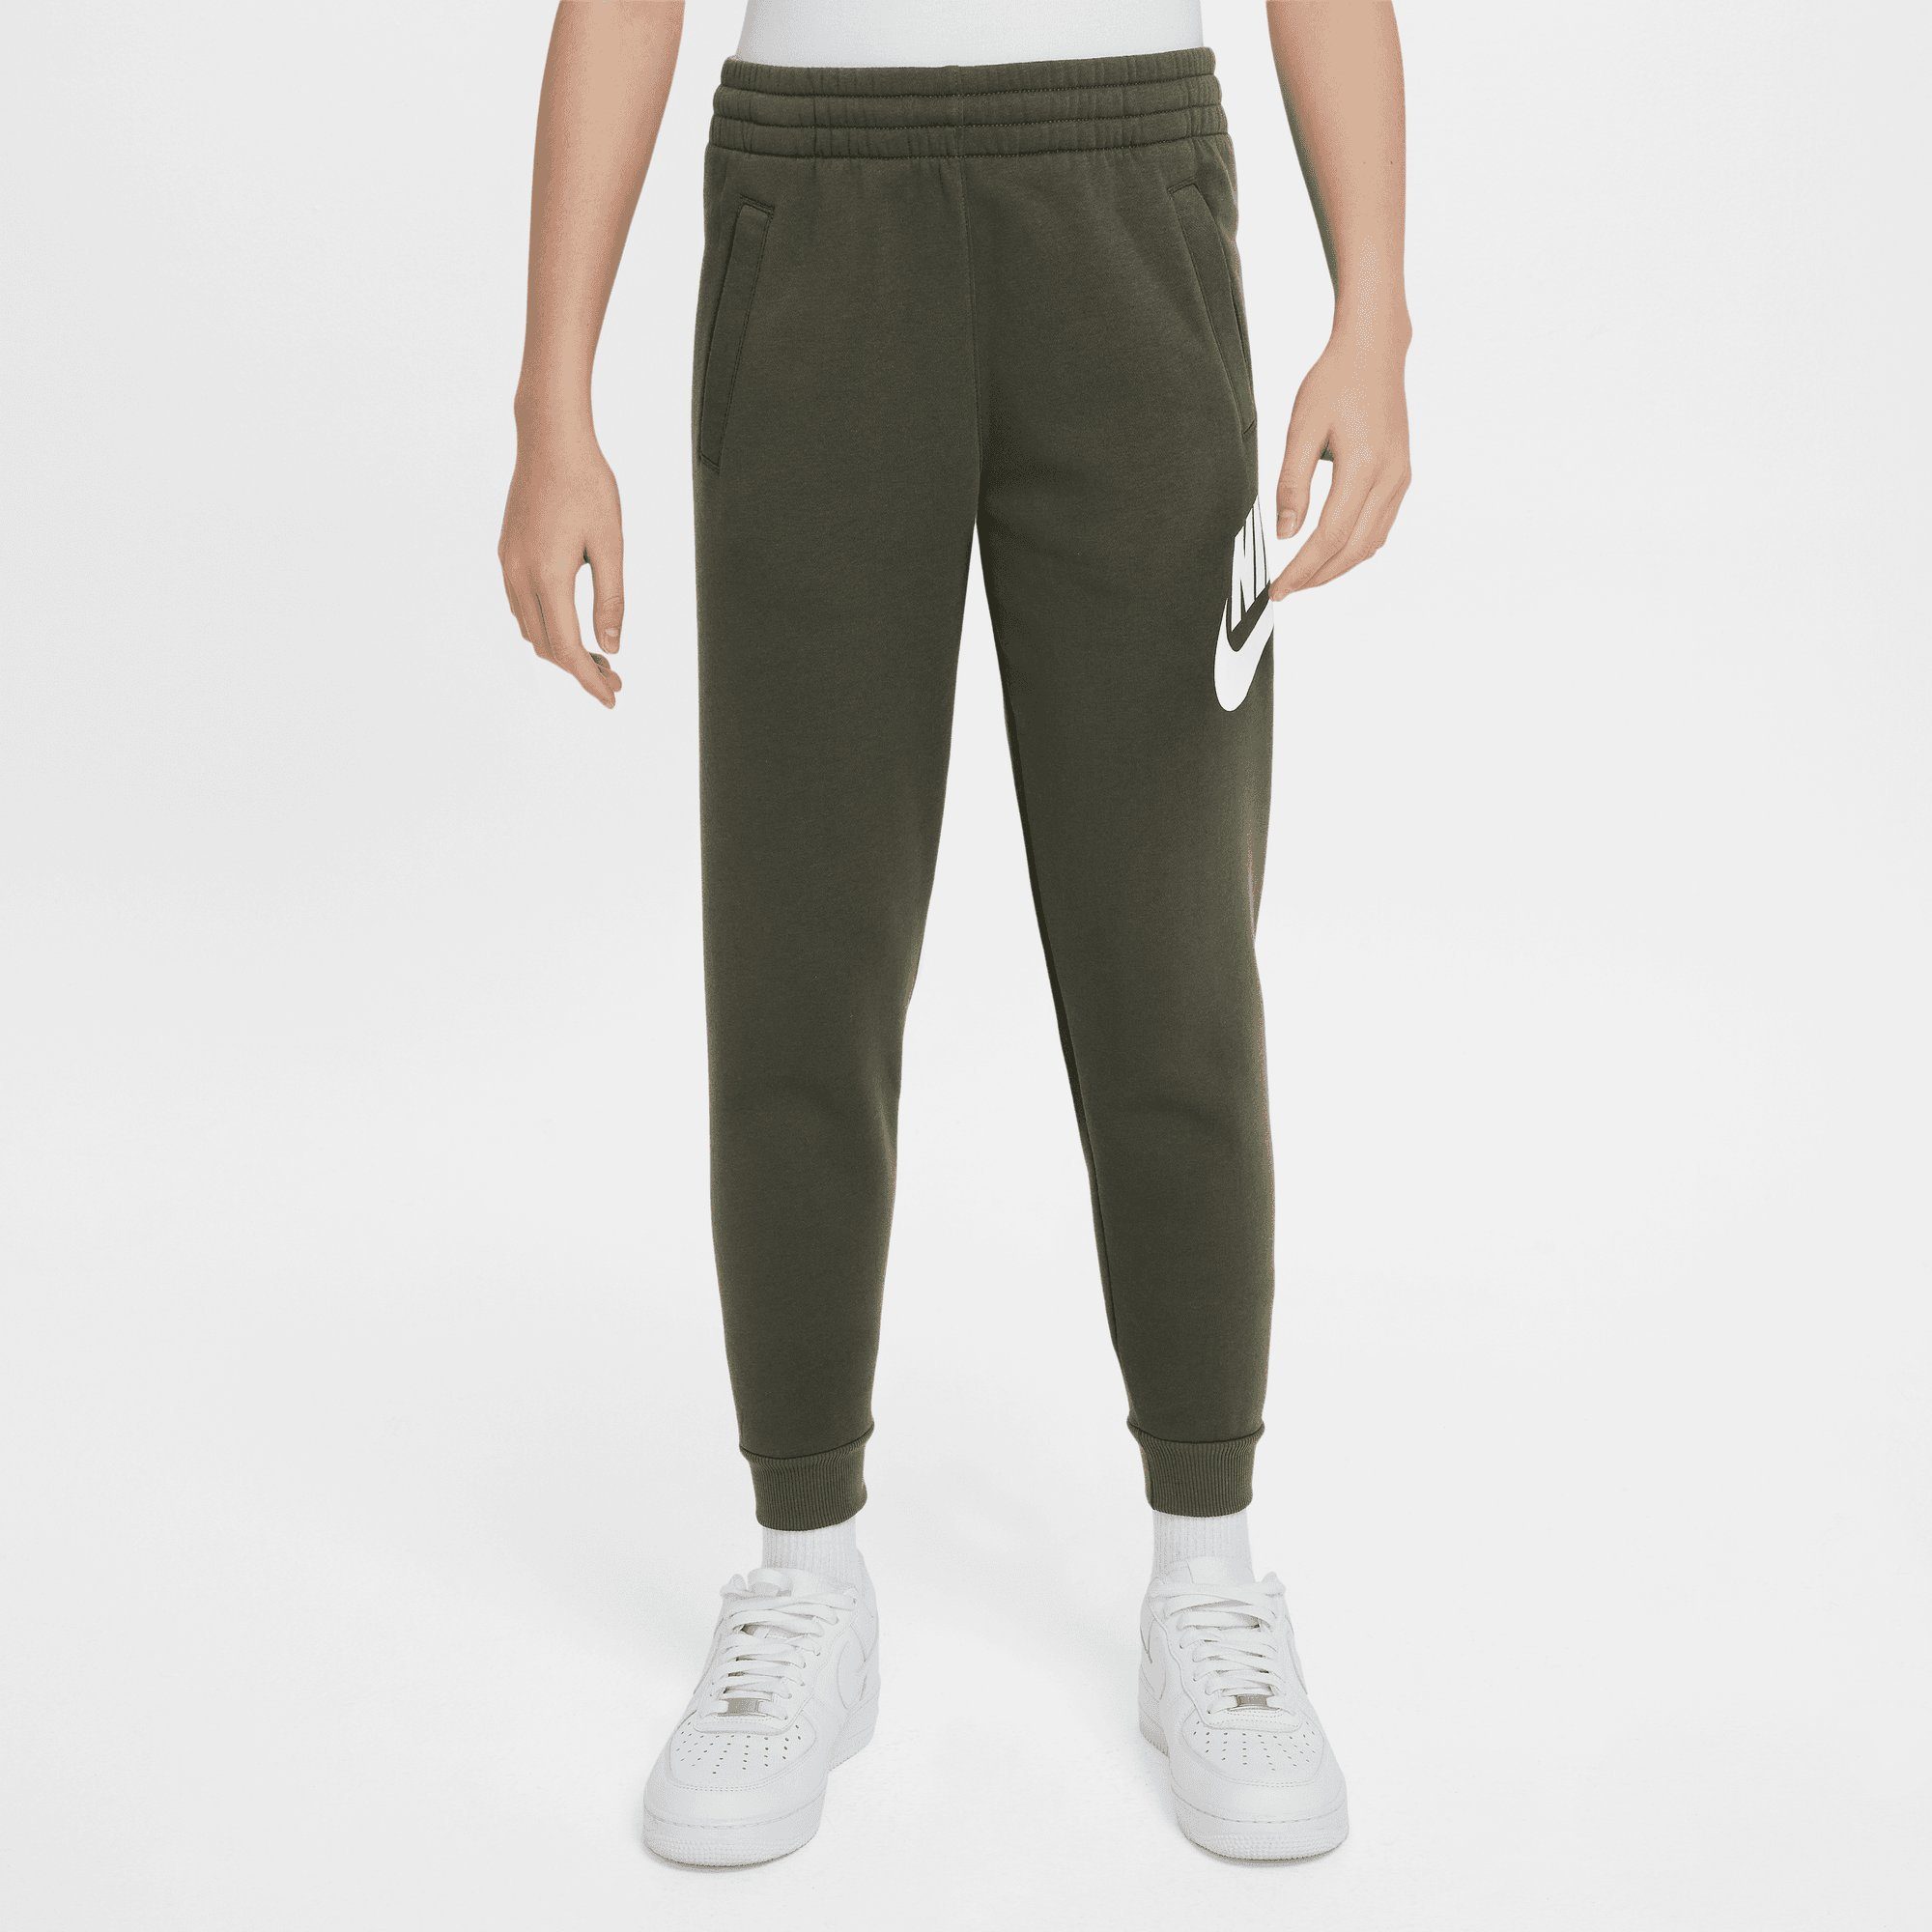 KHAKI/WHITE Nike KIDS' CARGO Jogginghose JOGGER FLEECE PANTS CLUB Sportswear BIG